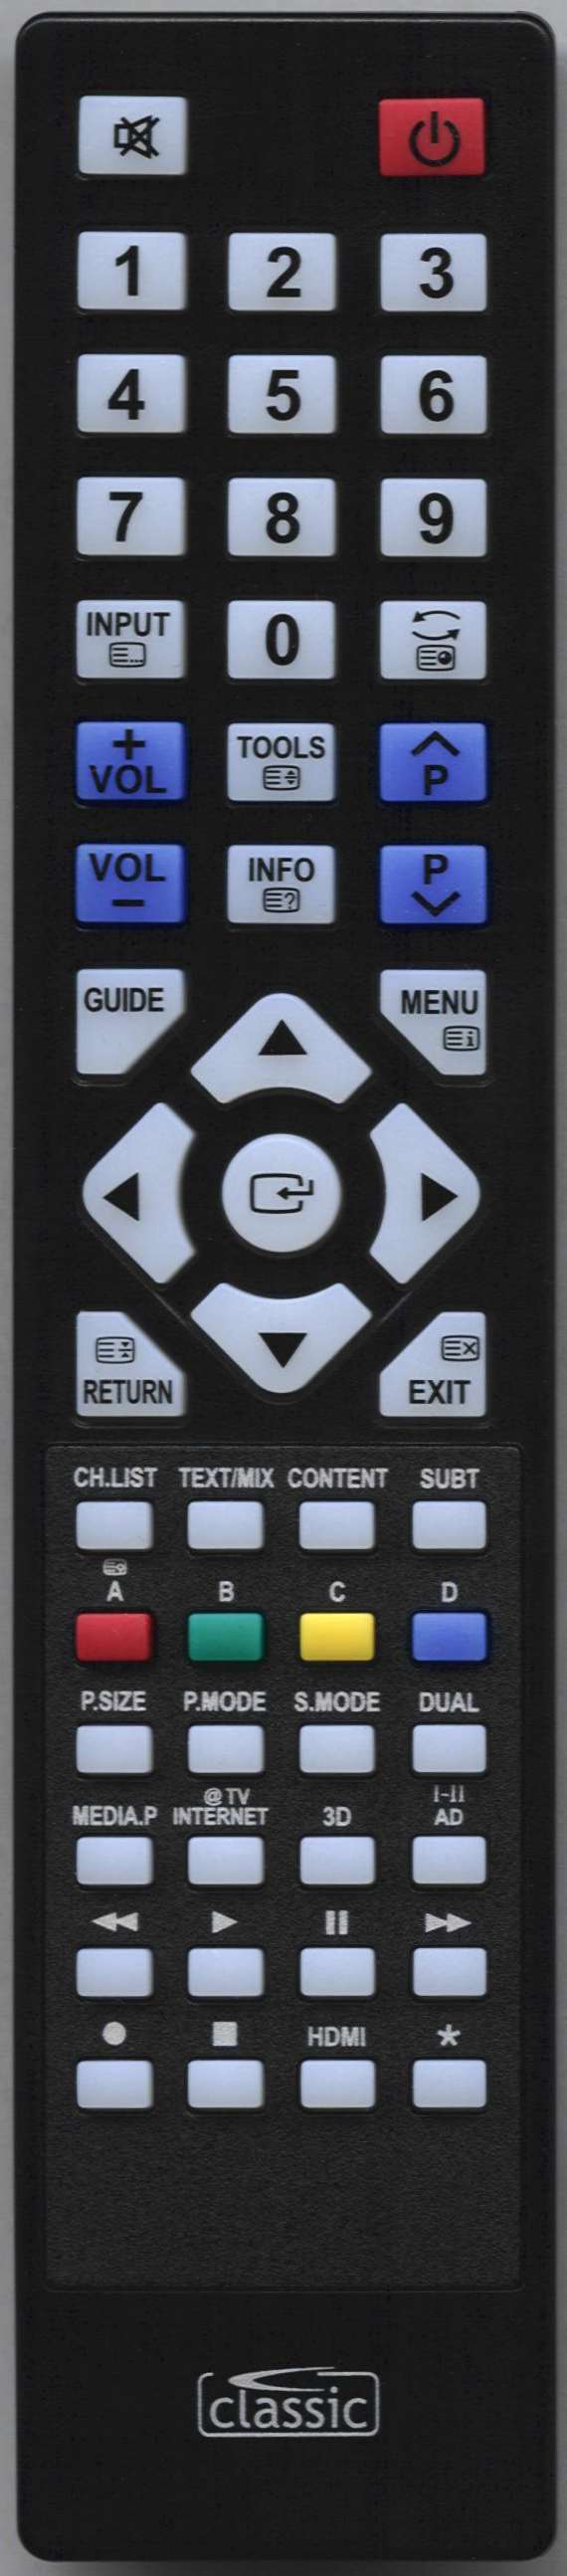 SAMSUNG PS50C7000YMXXS Remote Control